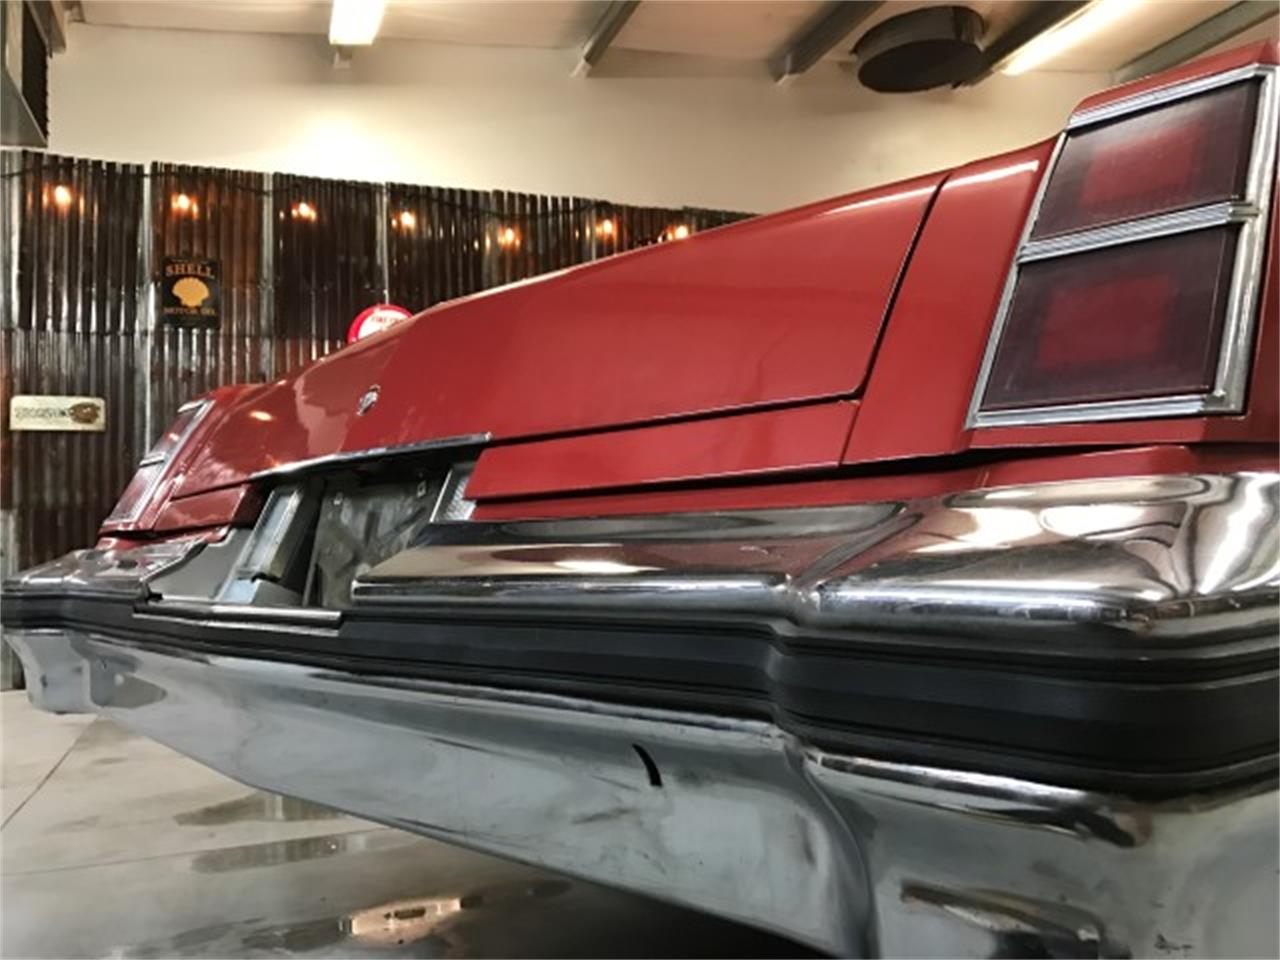 1977 Oldsmobile Cutlass for Sale | ClassicCars.com | CC ...